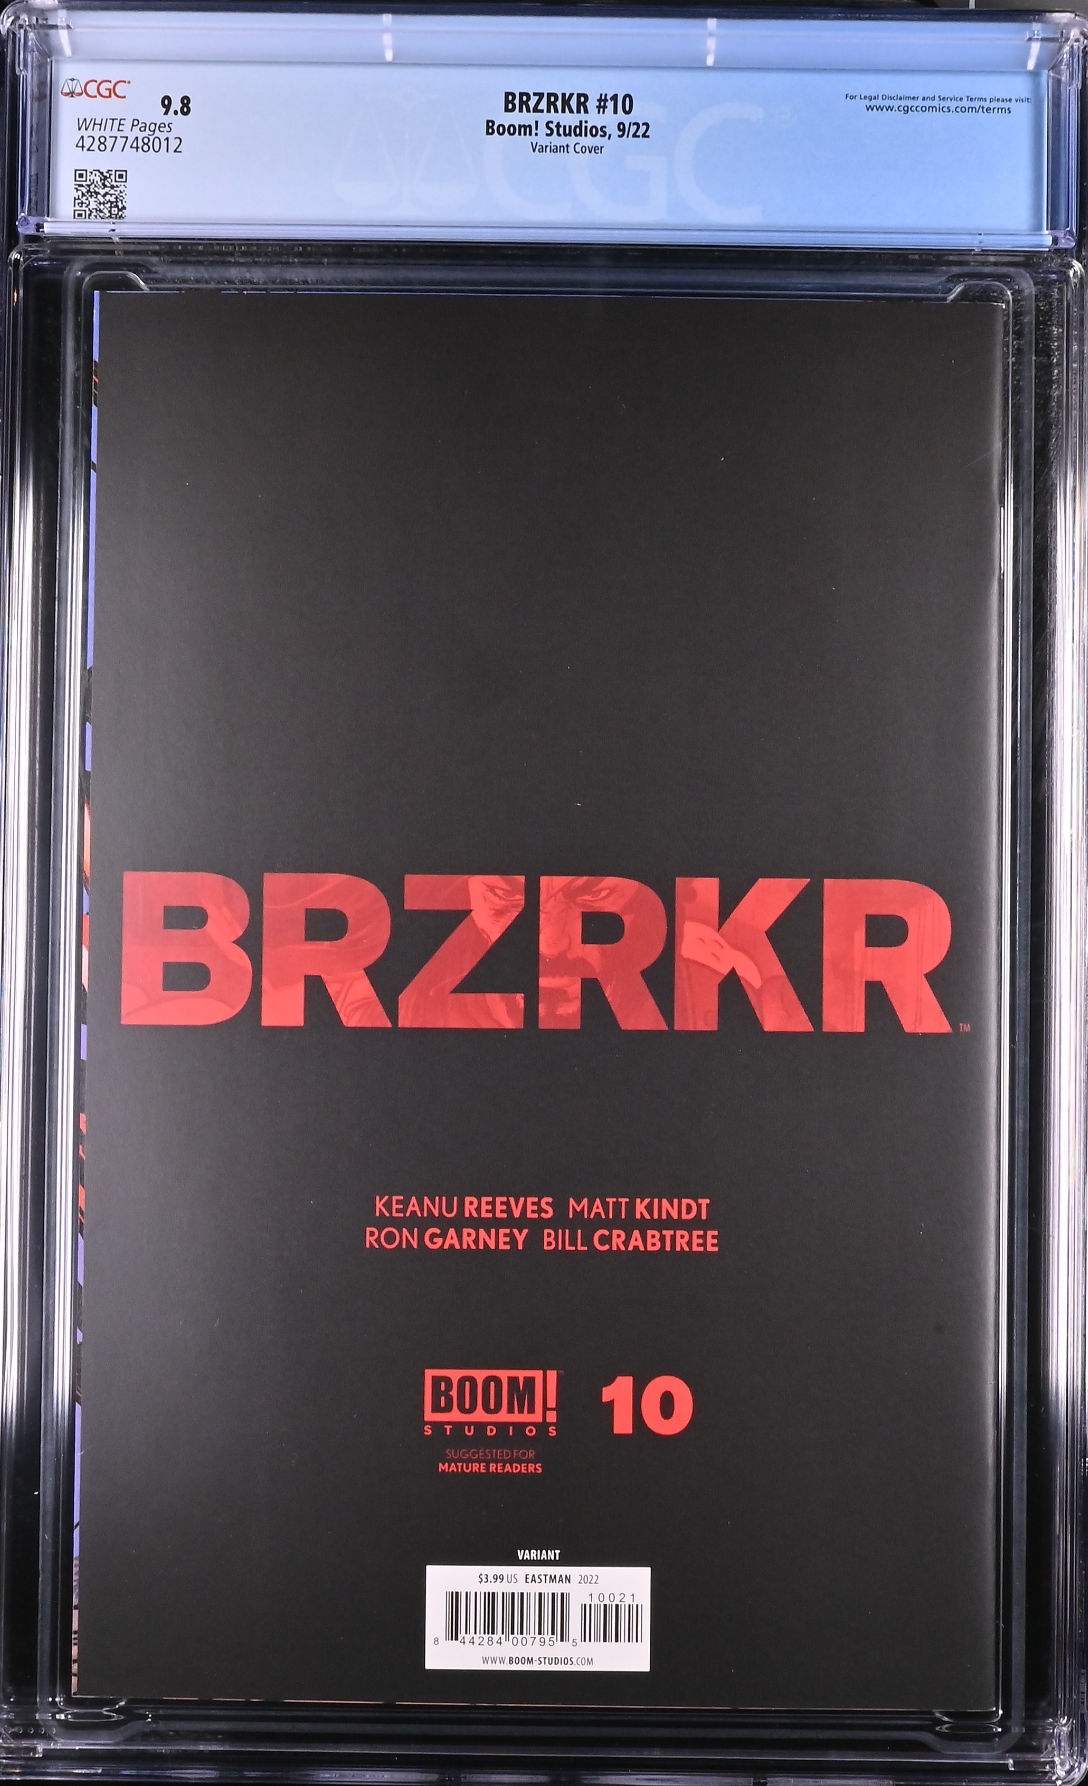 BRZRKR #10 Cover B Eastman CGC 9.8 (Berzerker)